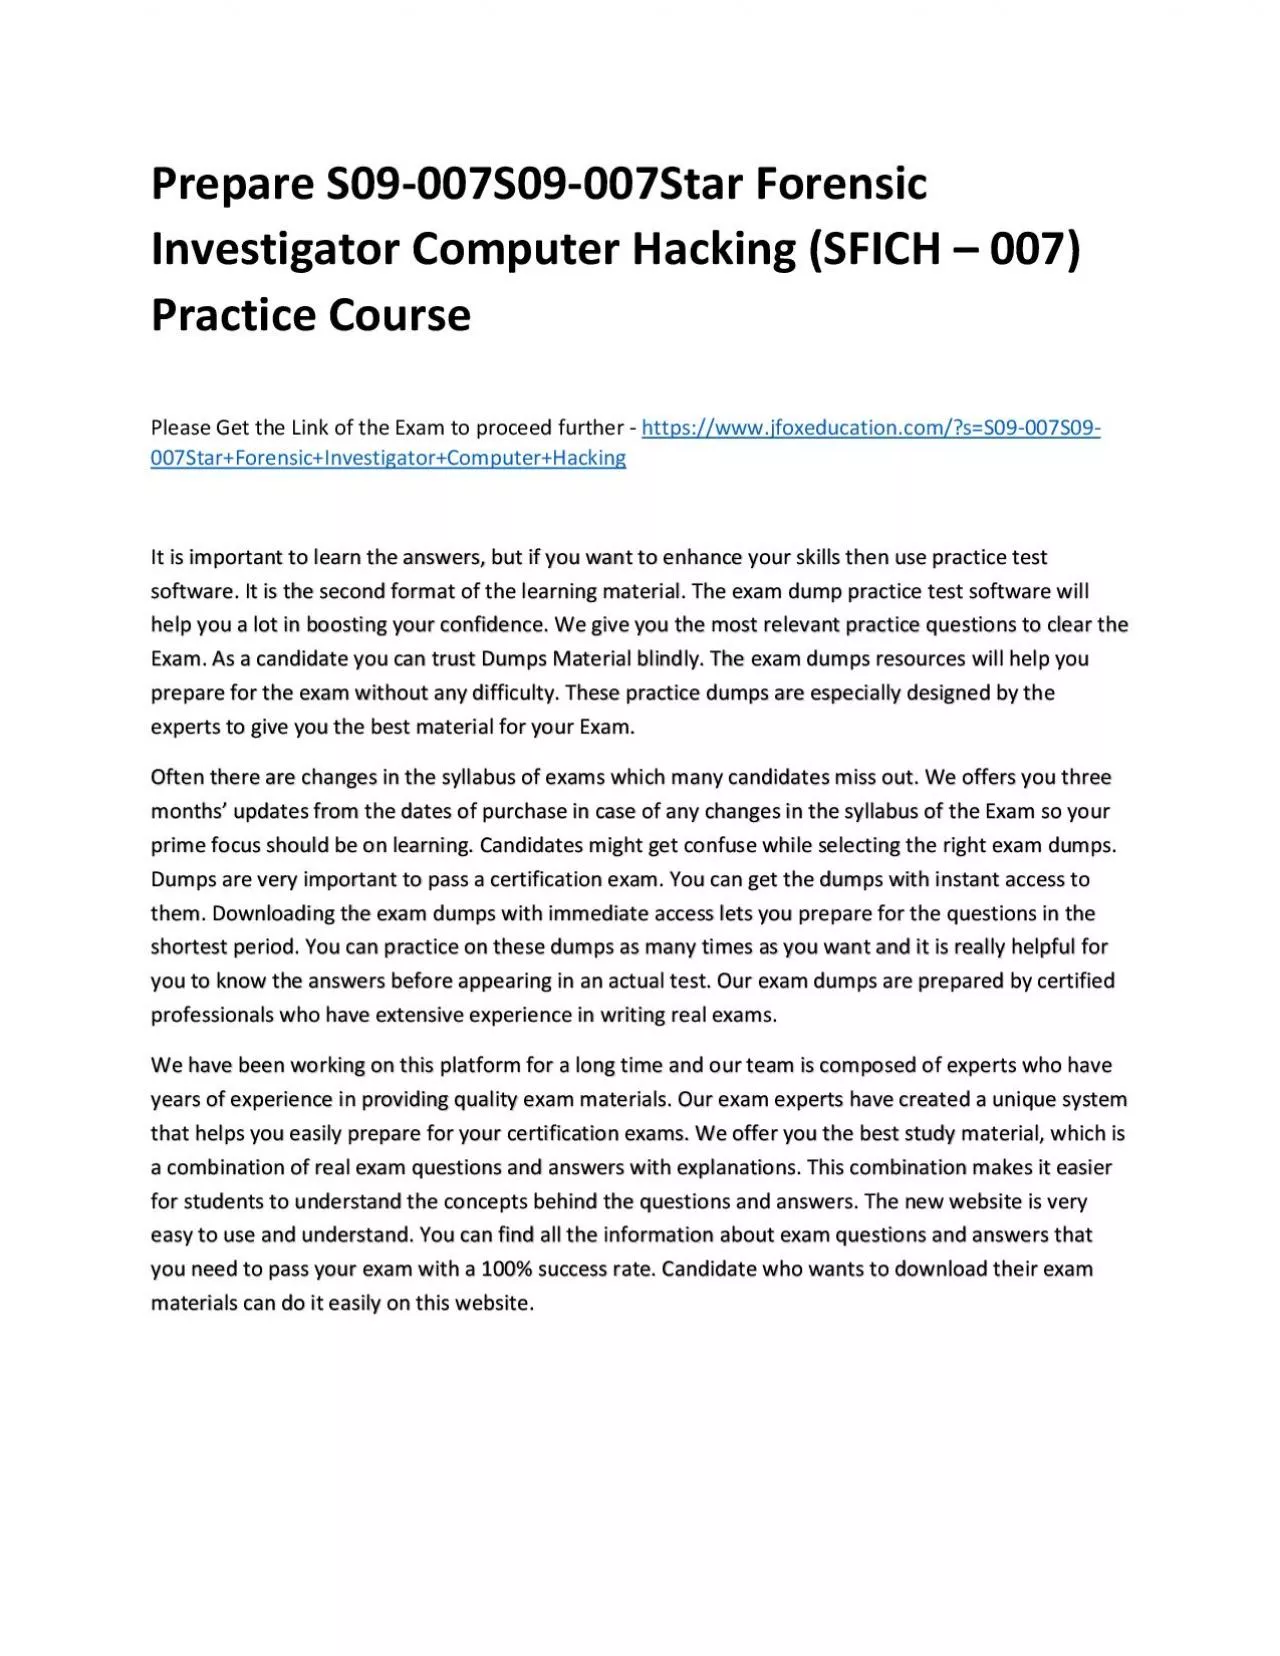 Prepare S09-007S09-007Star Forensic Investigator Computer Hacking (SFICH – 007) Practice